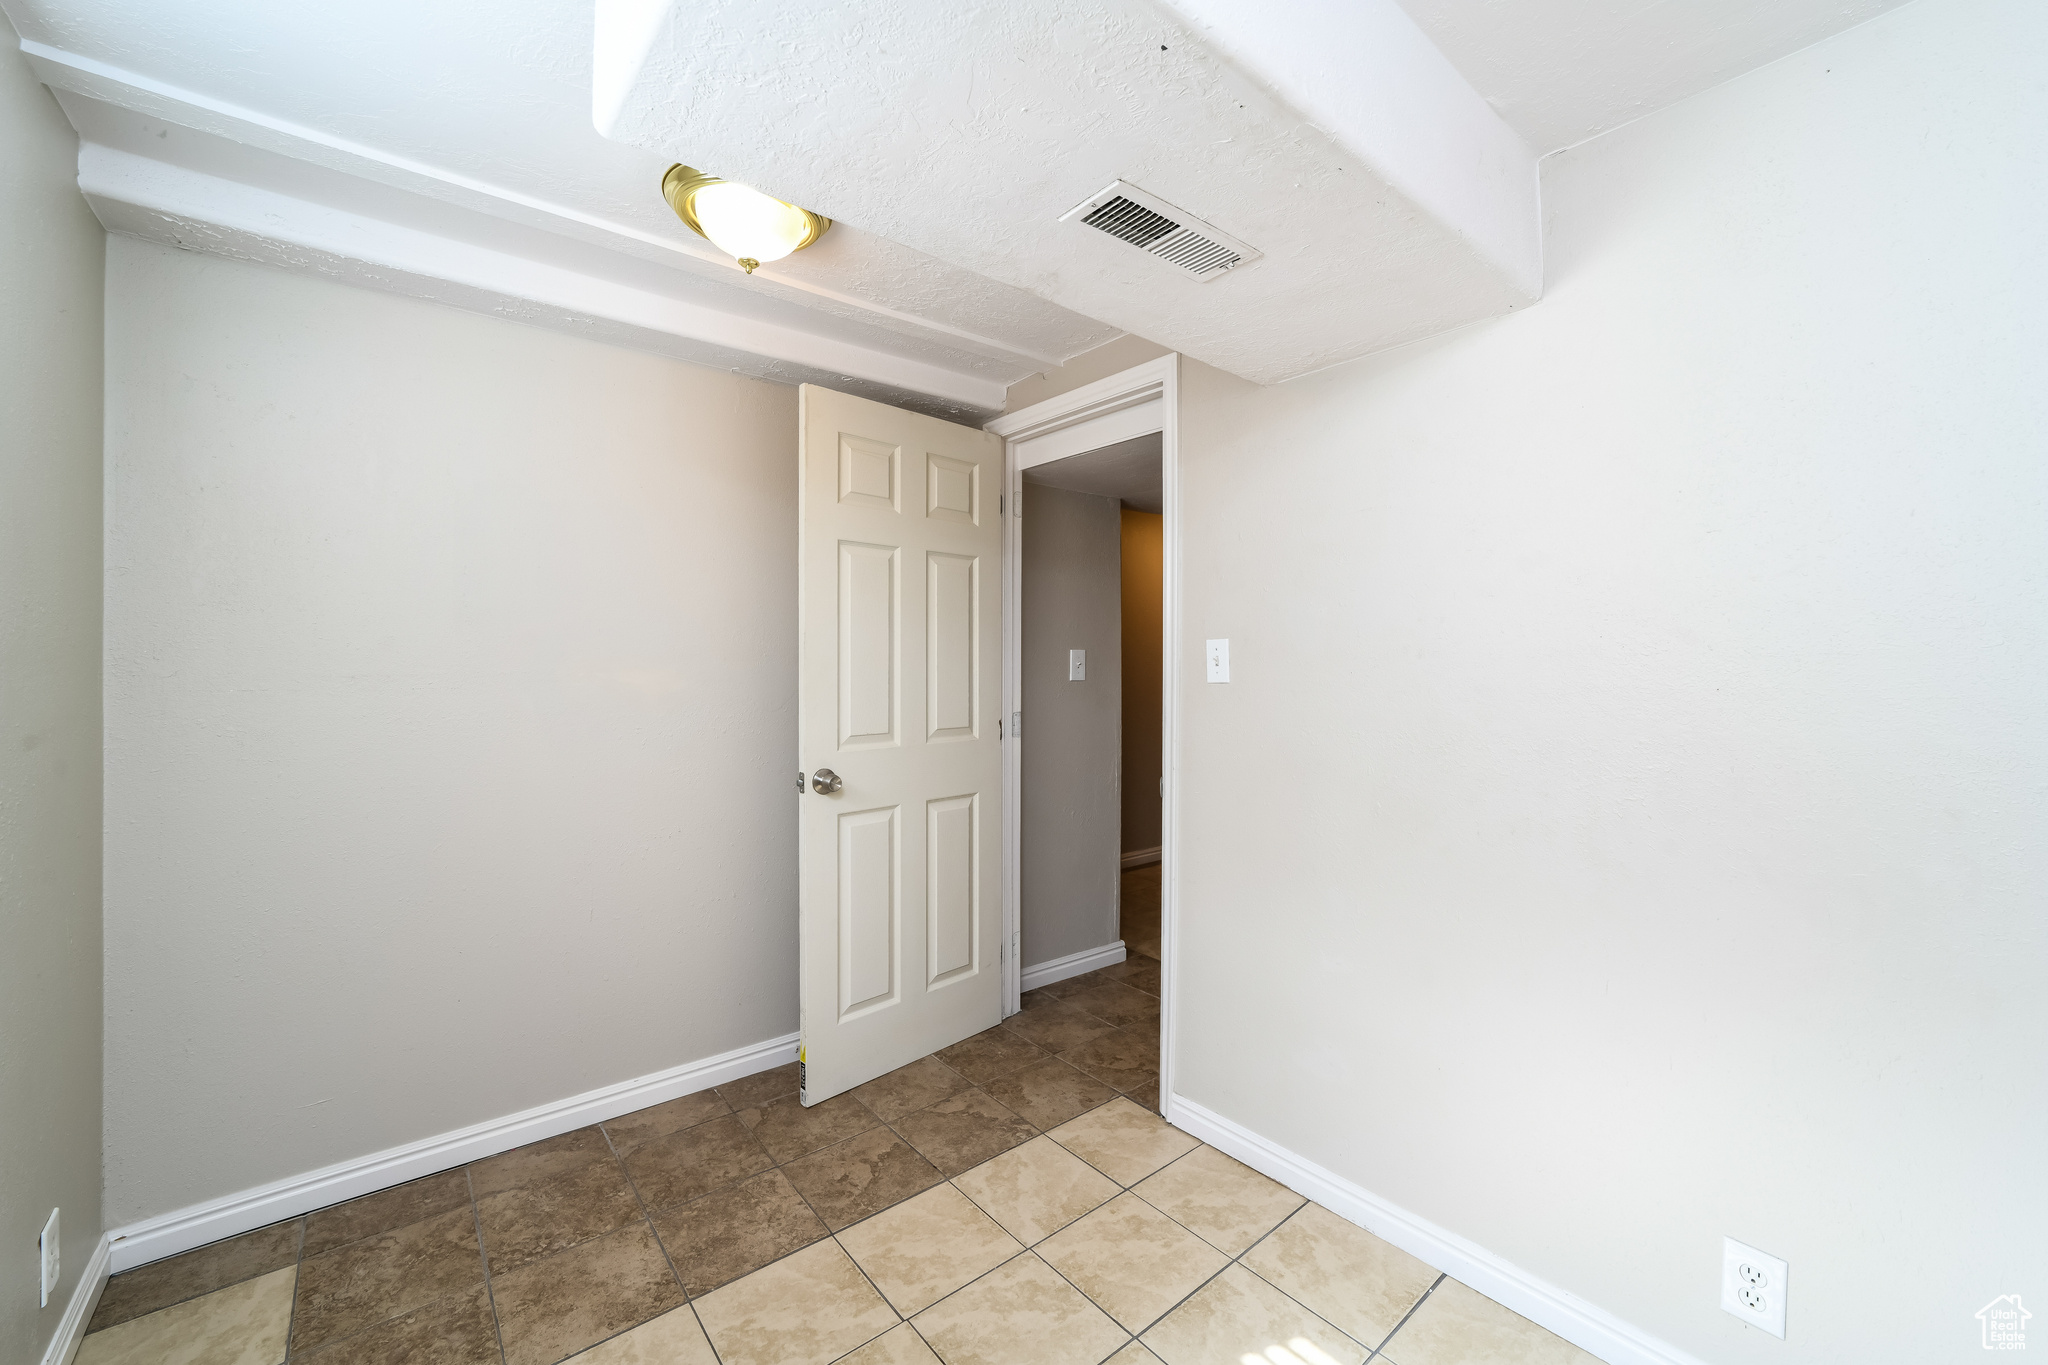 Unfurnished room featuring light tile flooring